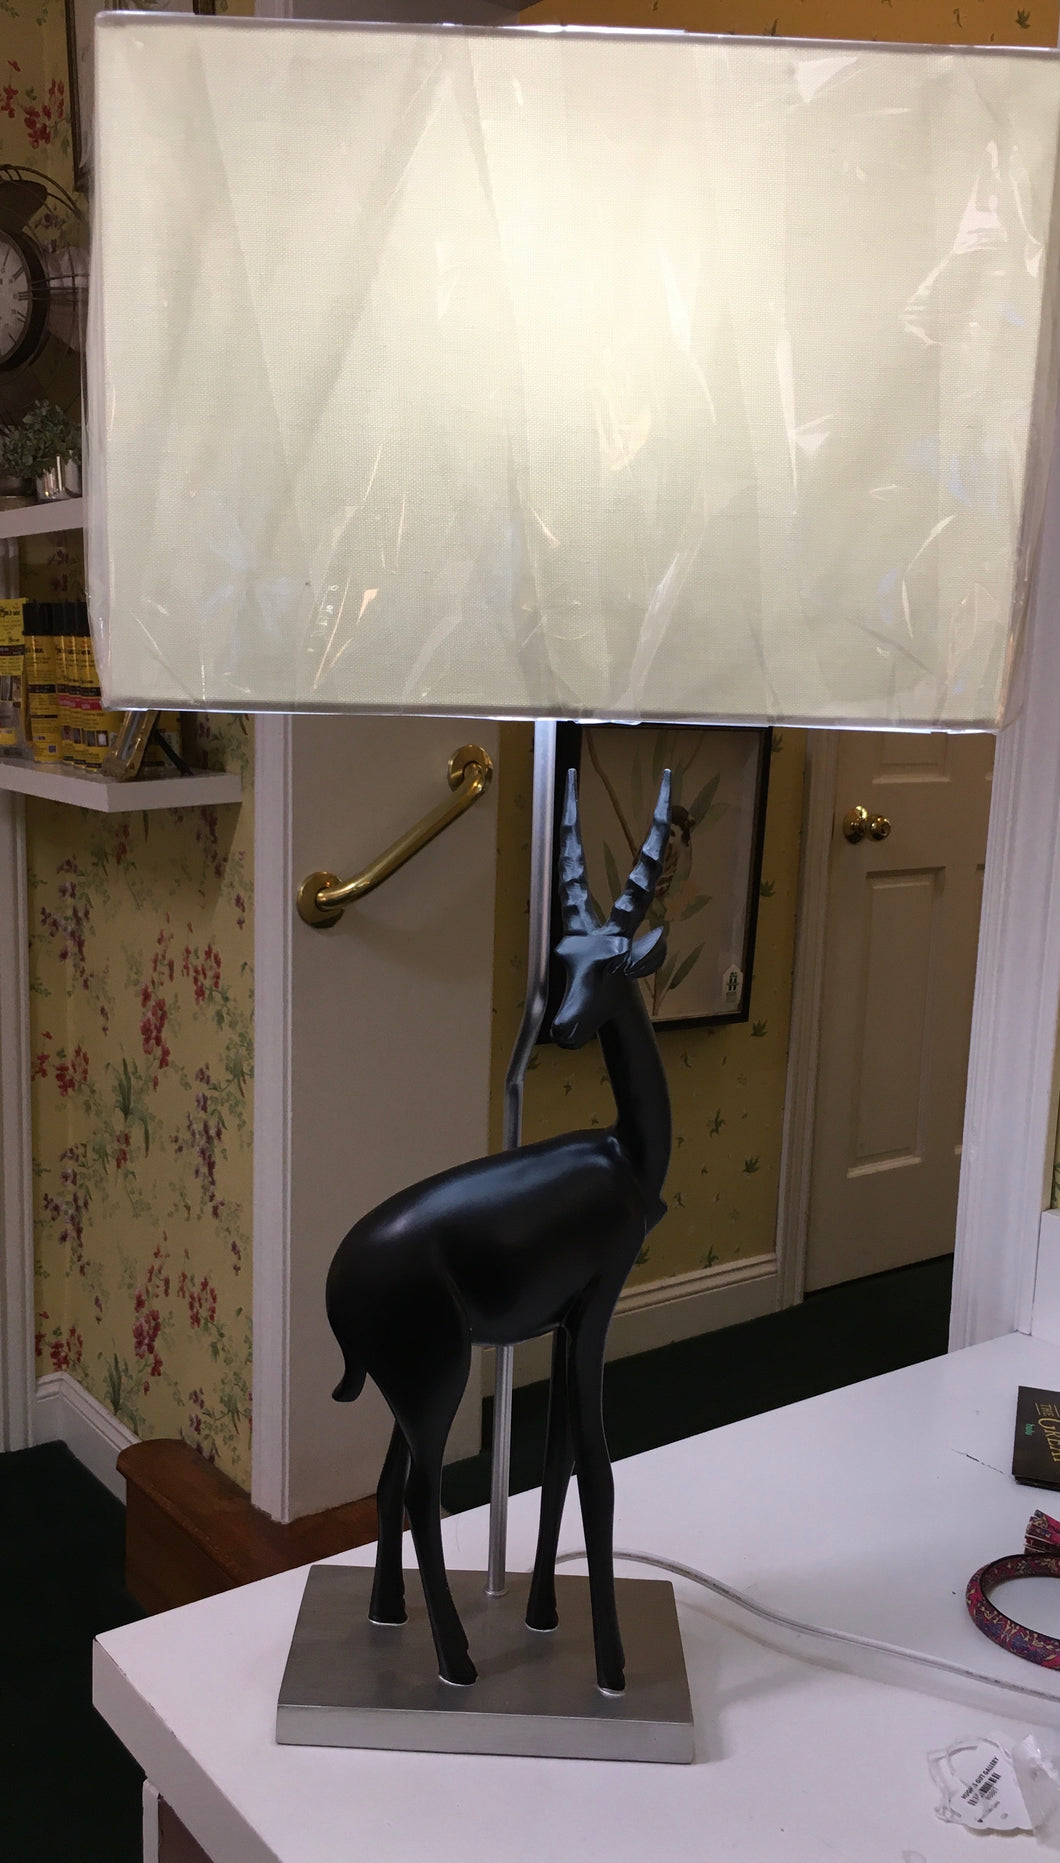 Antelope Lamp